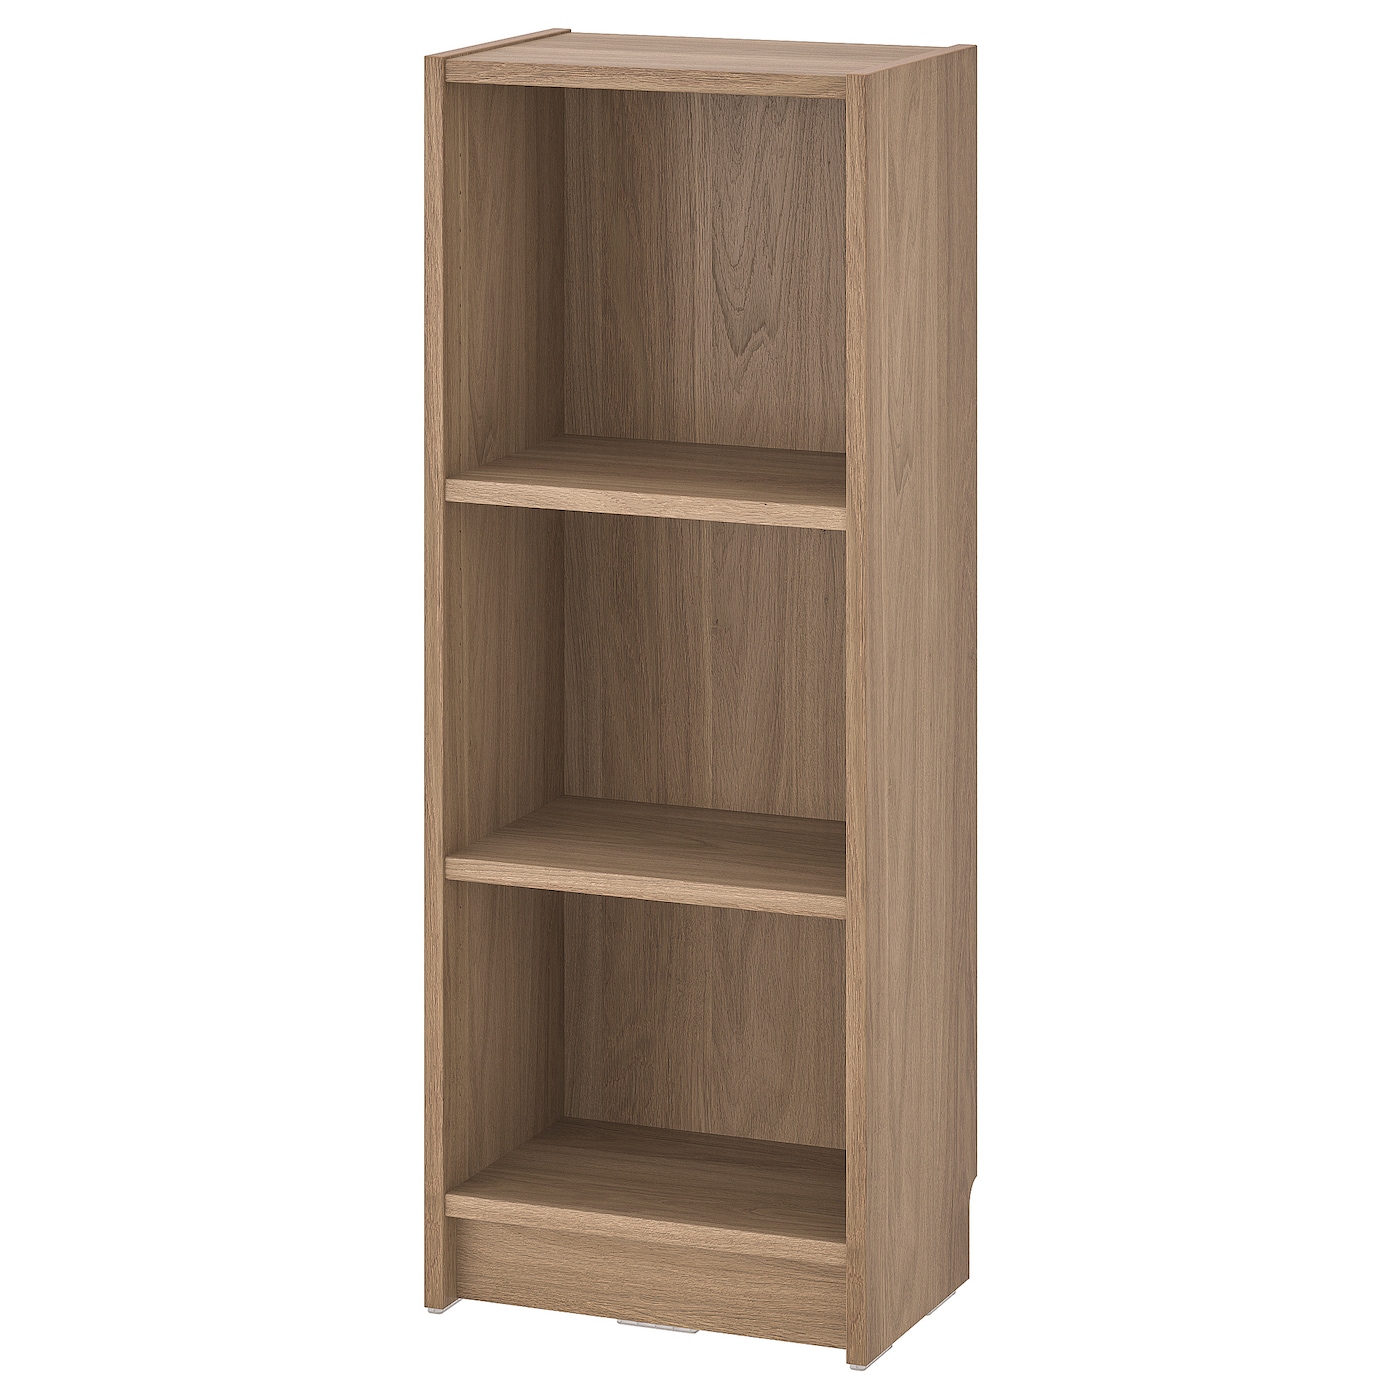 Книжный шкаф -  BILLY IKEA/ БИЛЛИ ИКЕА, 40х28х106 см,  под беленый дуб